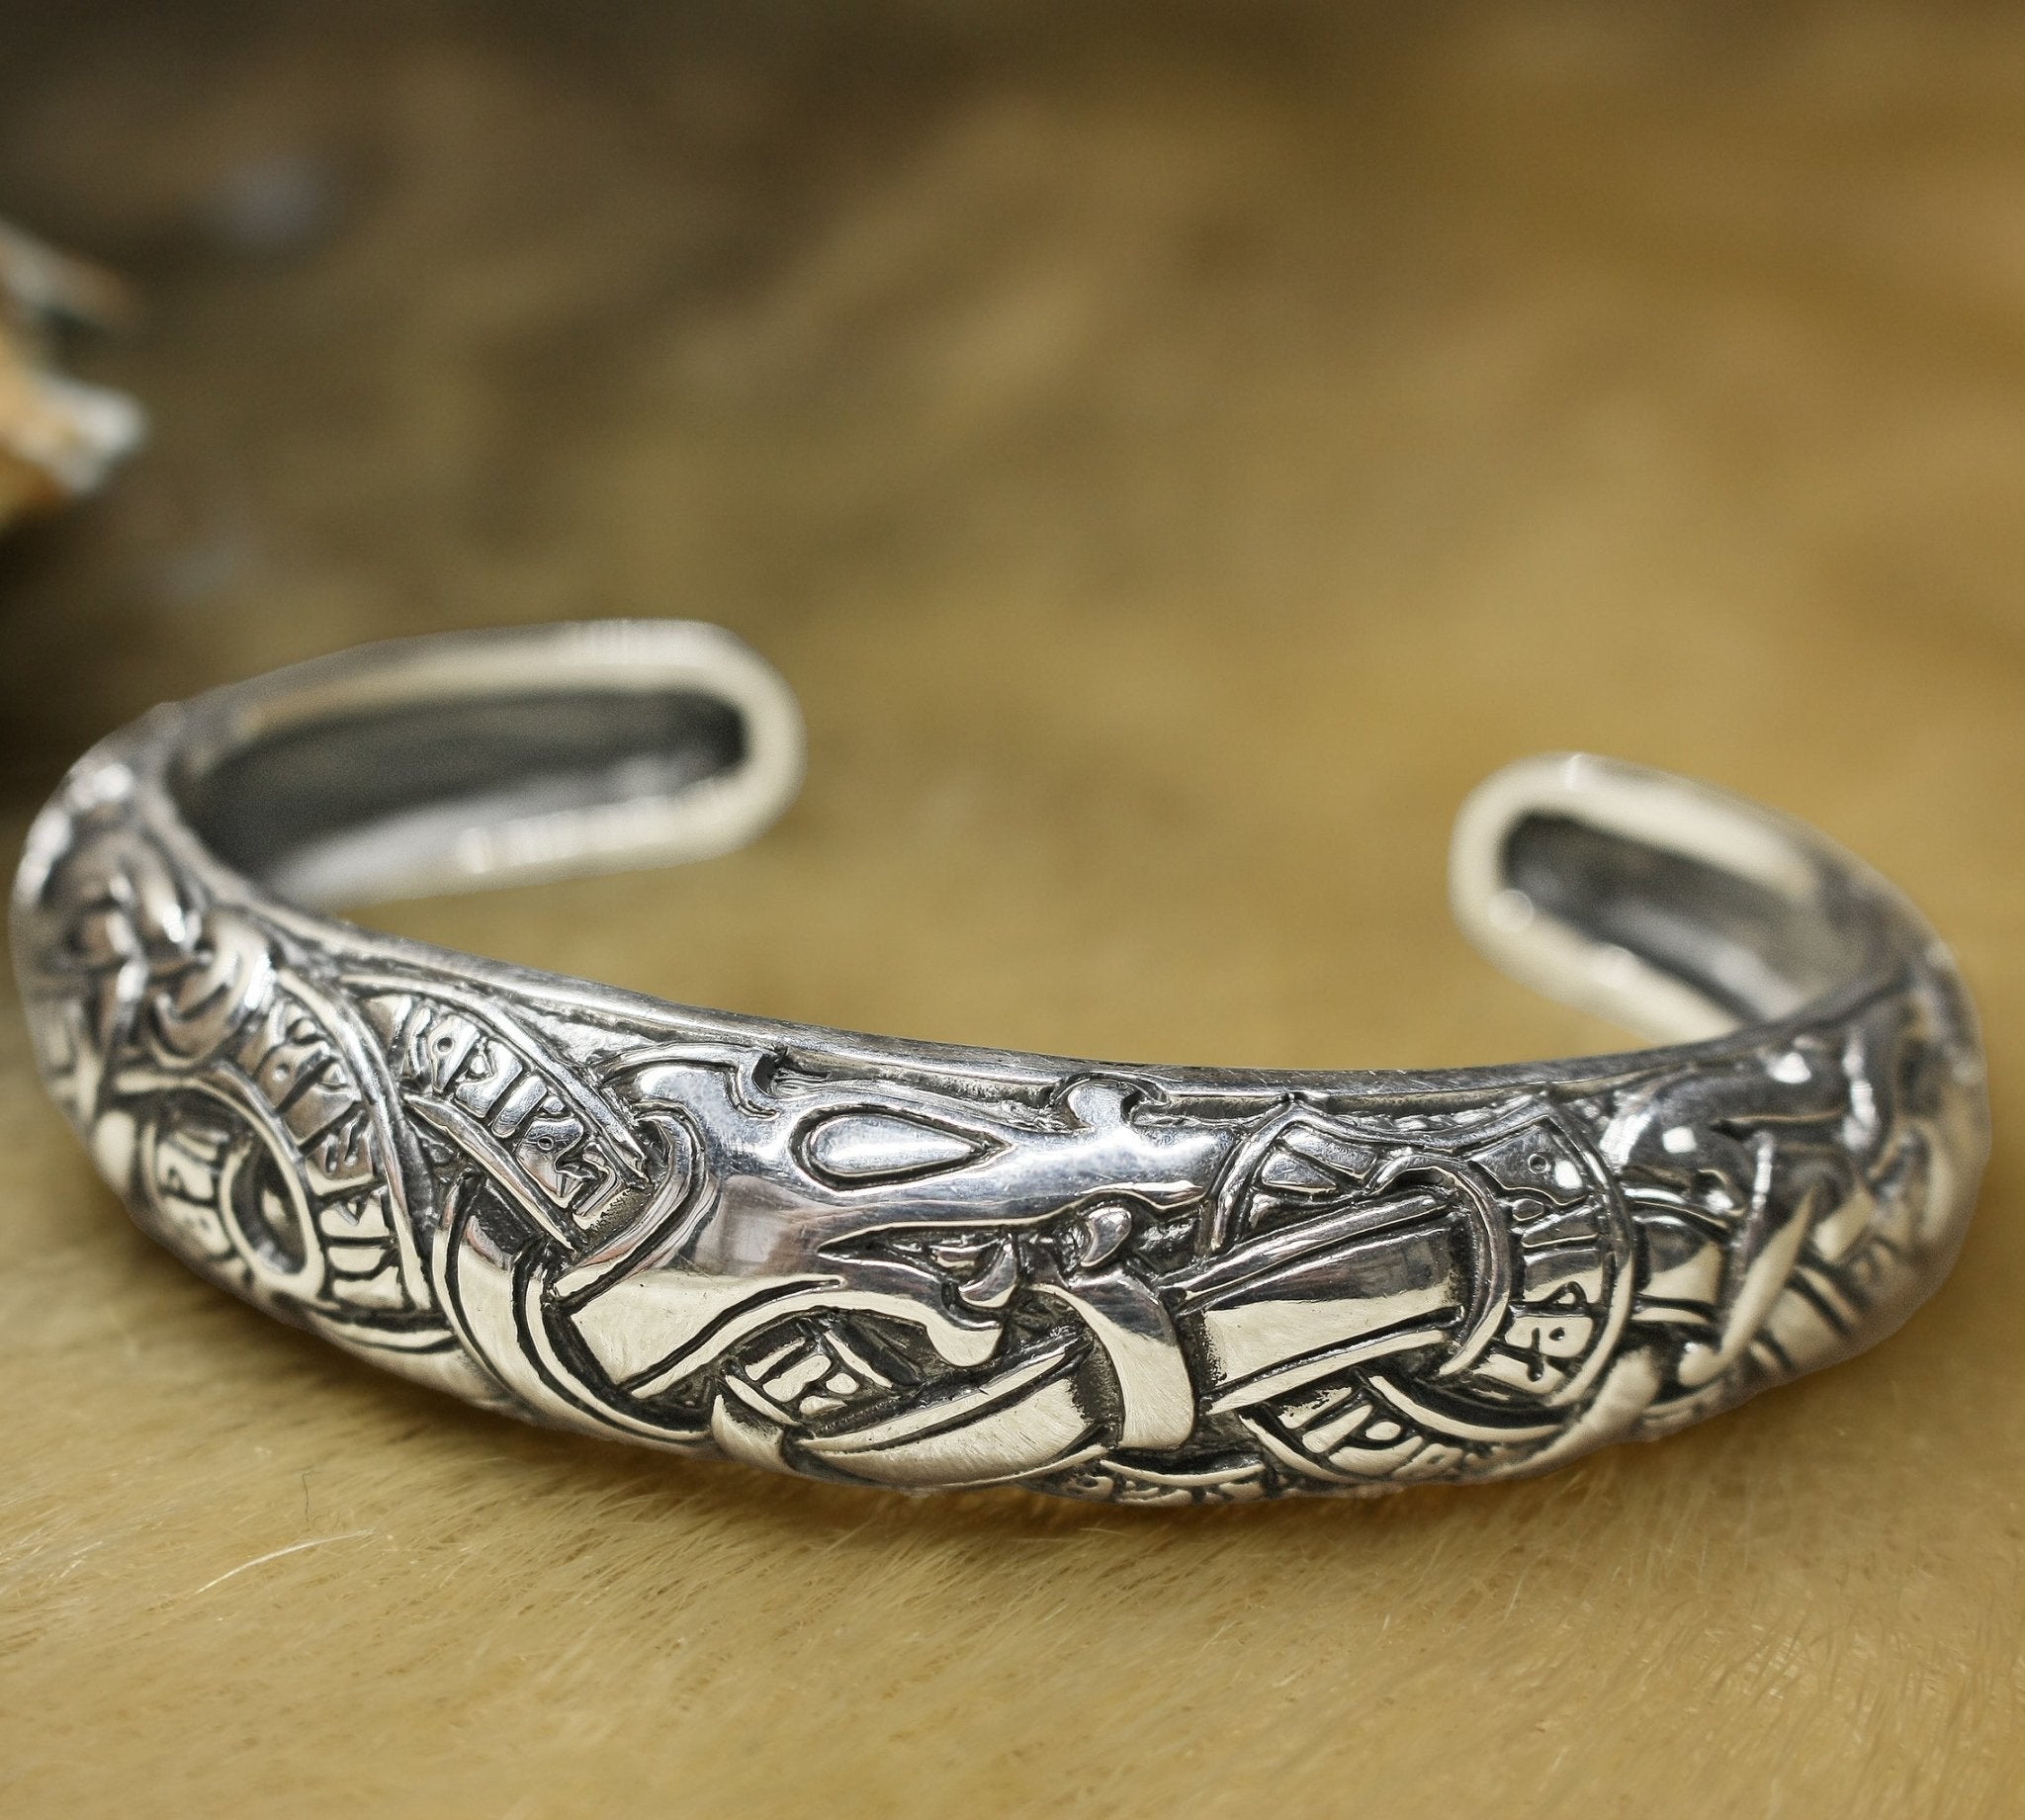 Stamped Futhark Runes Stainless Steel Viking Cuff Bracelet – GTHIC